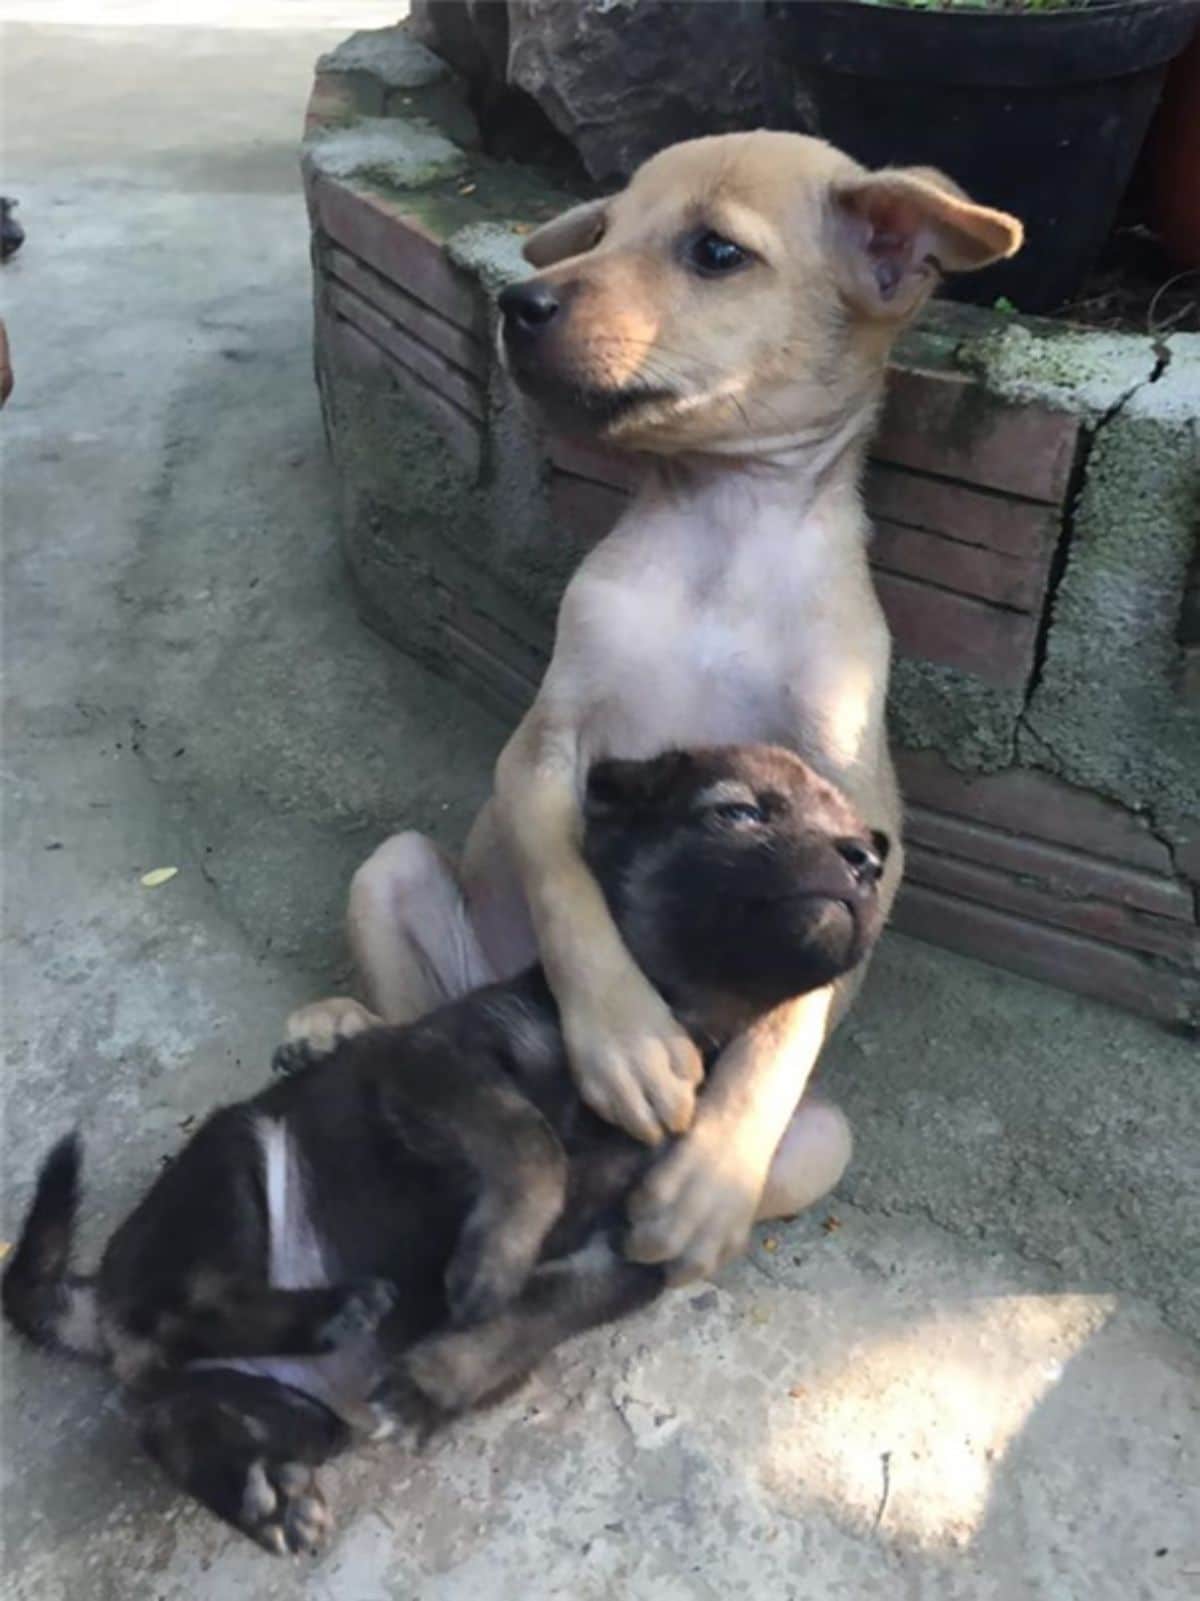 a larger brown puppy hugging a smaller black puppy in a garden